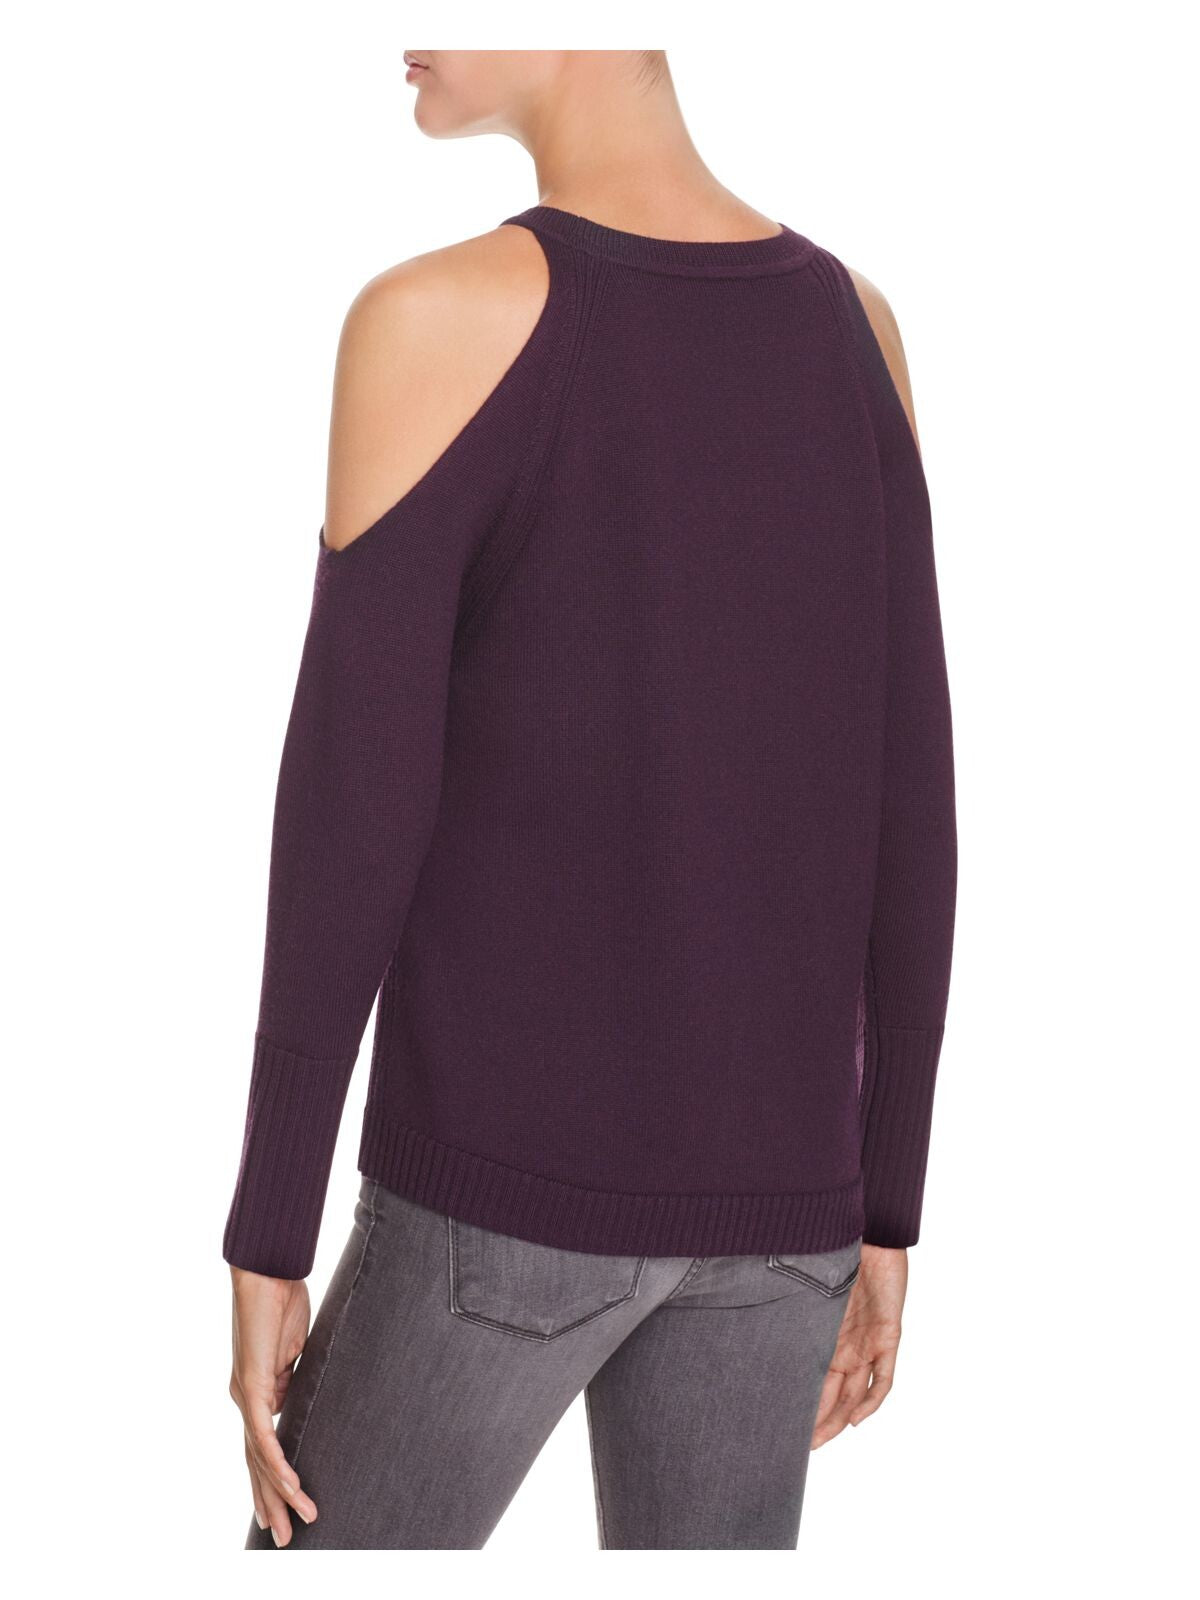 RAMY BROOK Womens Purple Cut Out Beaded Long Sleeve Jewel Neck Sweater Size: M